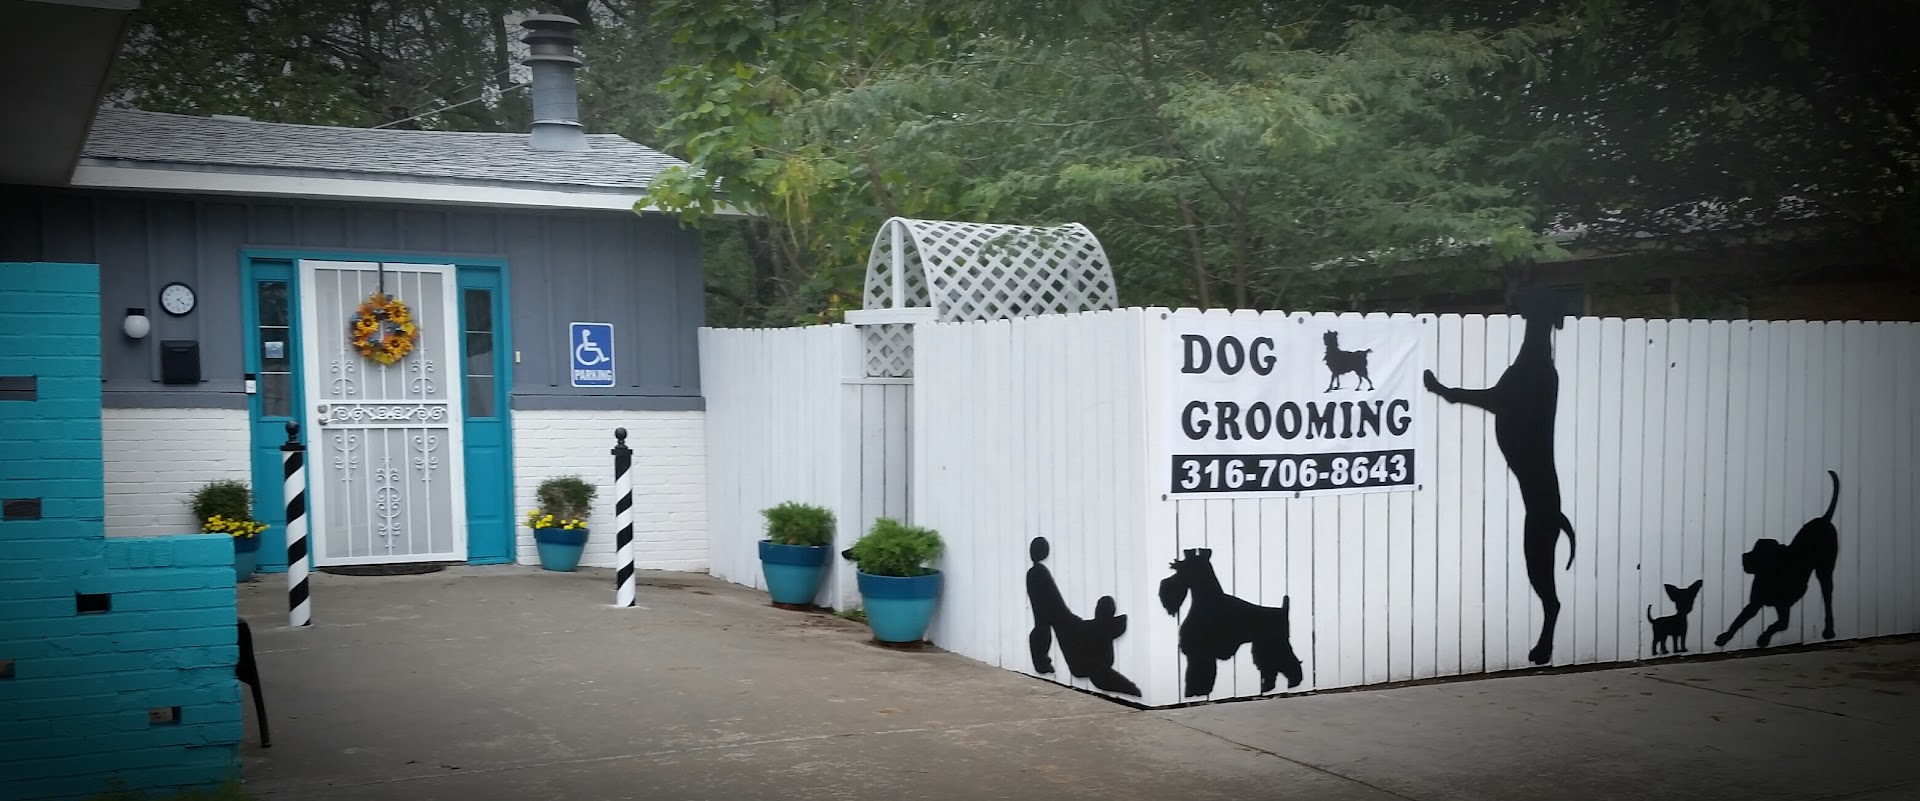 Chisholm Tails Dog Grooming LLC